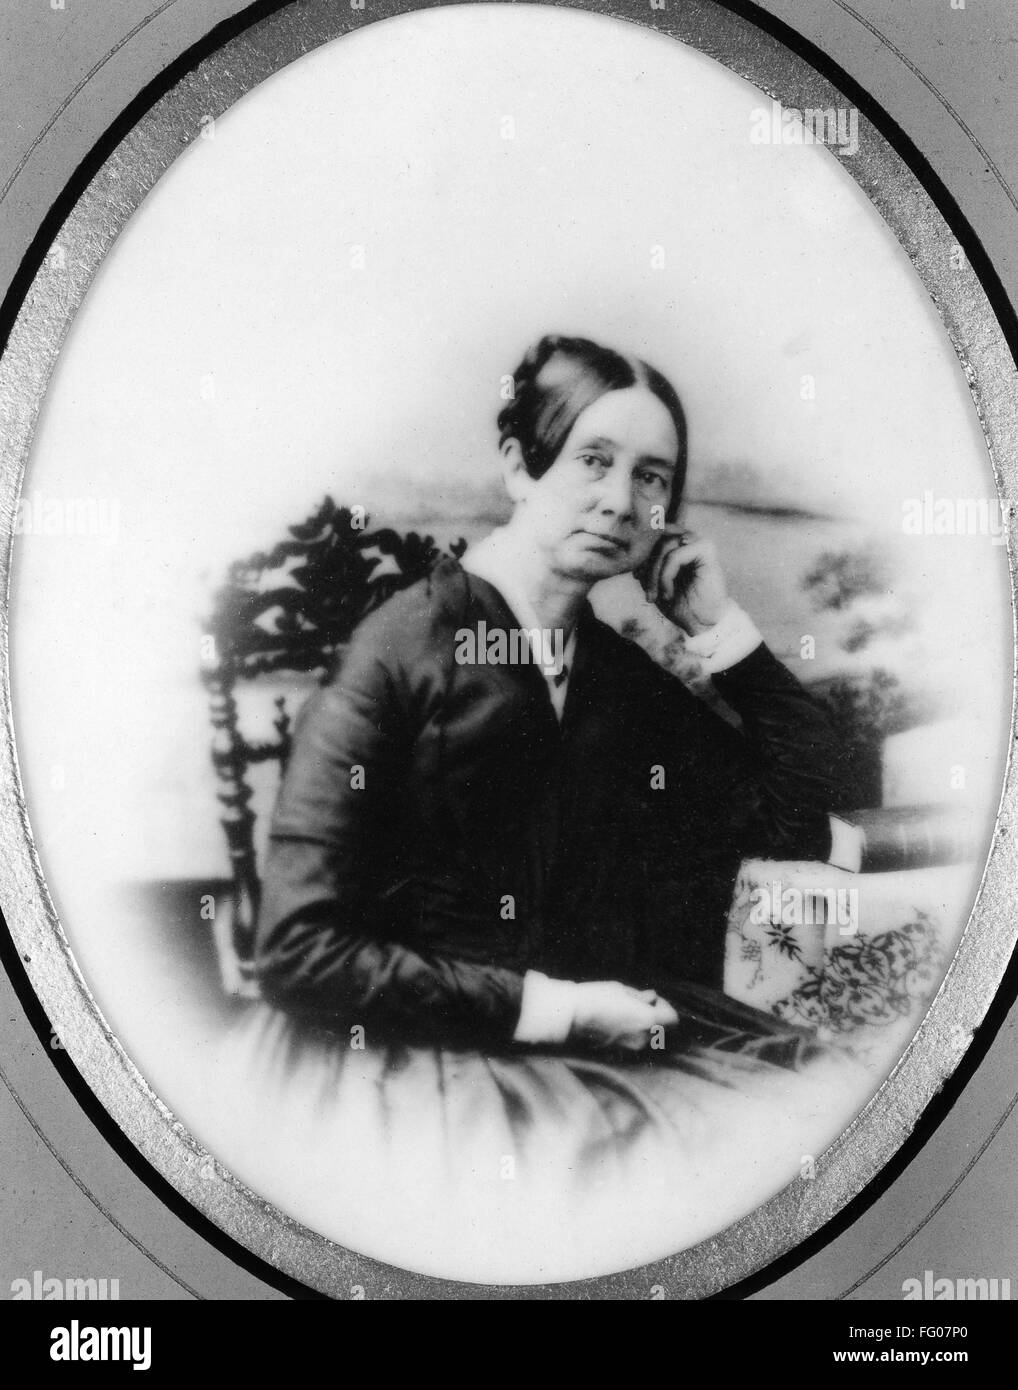 DOROTHEA DIX (1802-1887)./nAmerican philanthropist and reformer. Photograph, c1855. Stock Photo